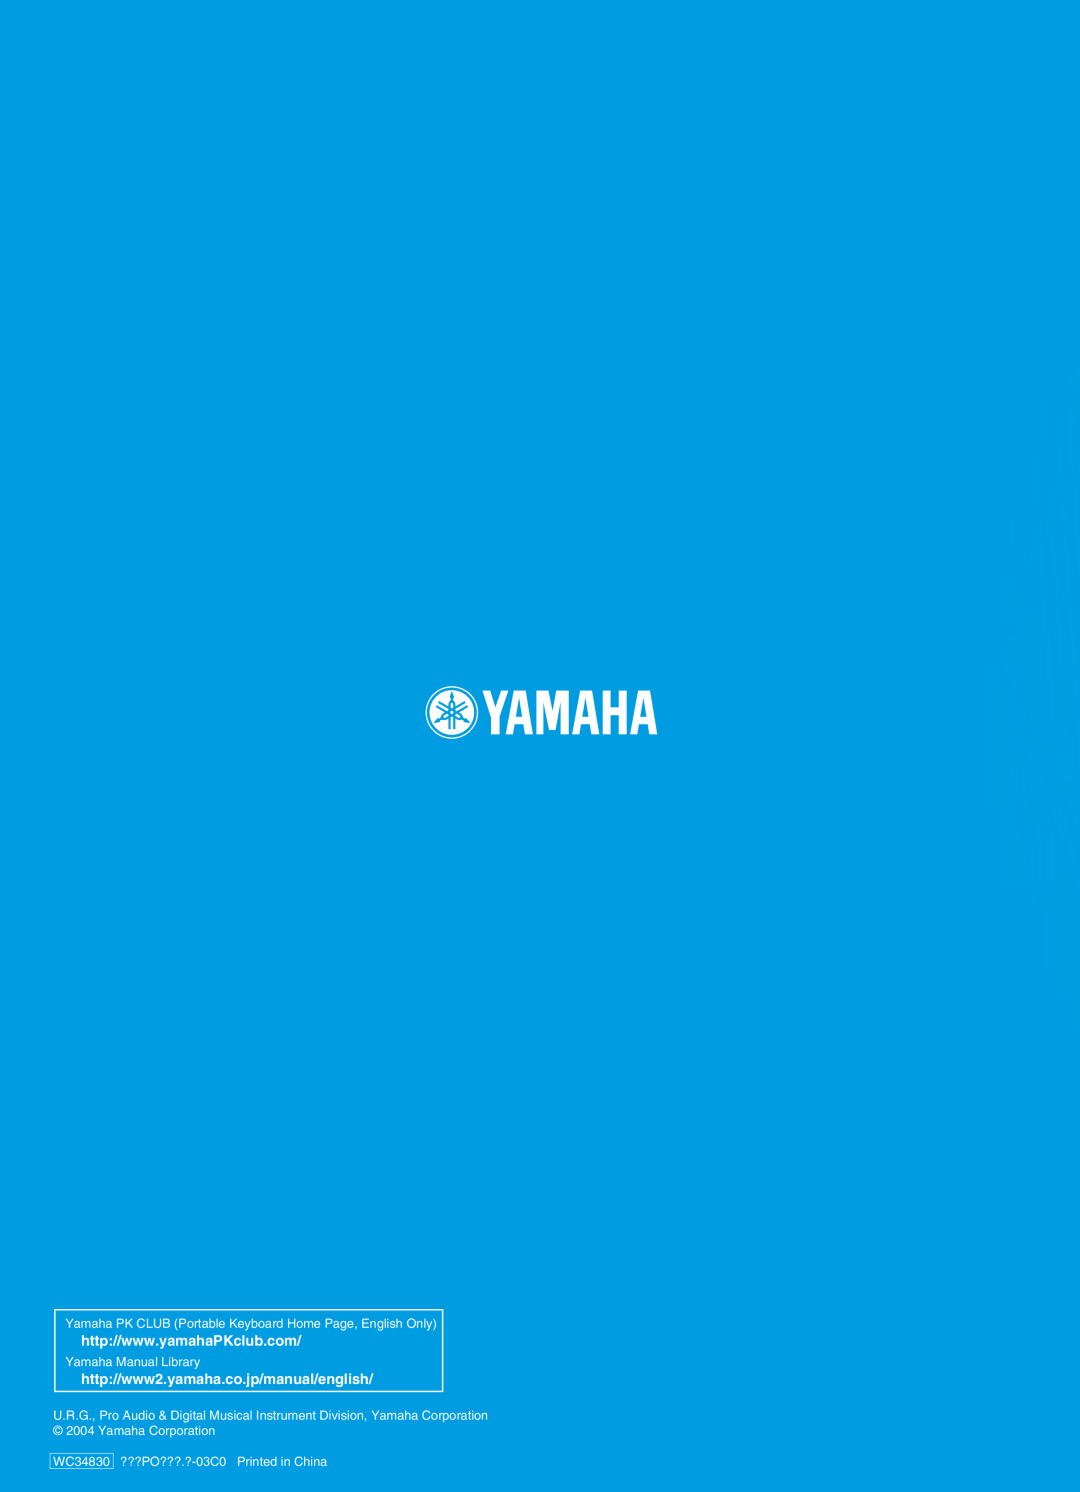 Yamaha DGX-505 http//www2.yamaha.co.jp/manual/english, Yamaha PK CLUB Portable Keyboard Home Page, English Only, WC34830 